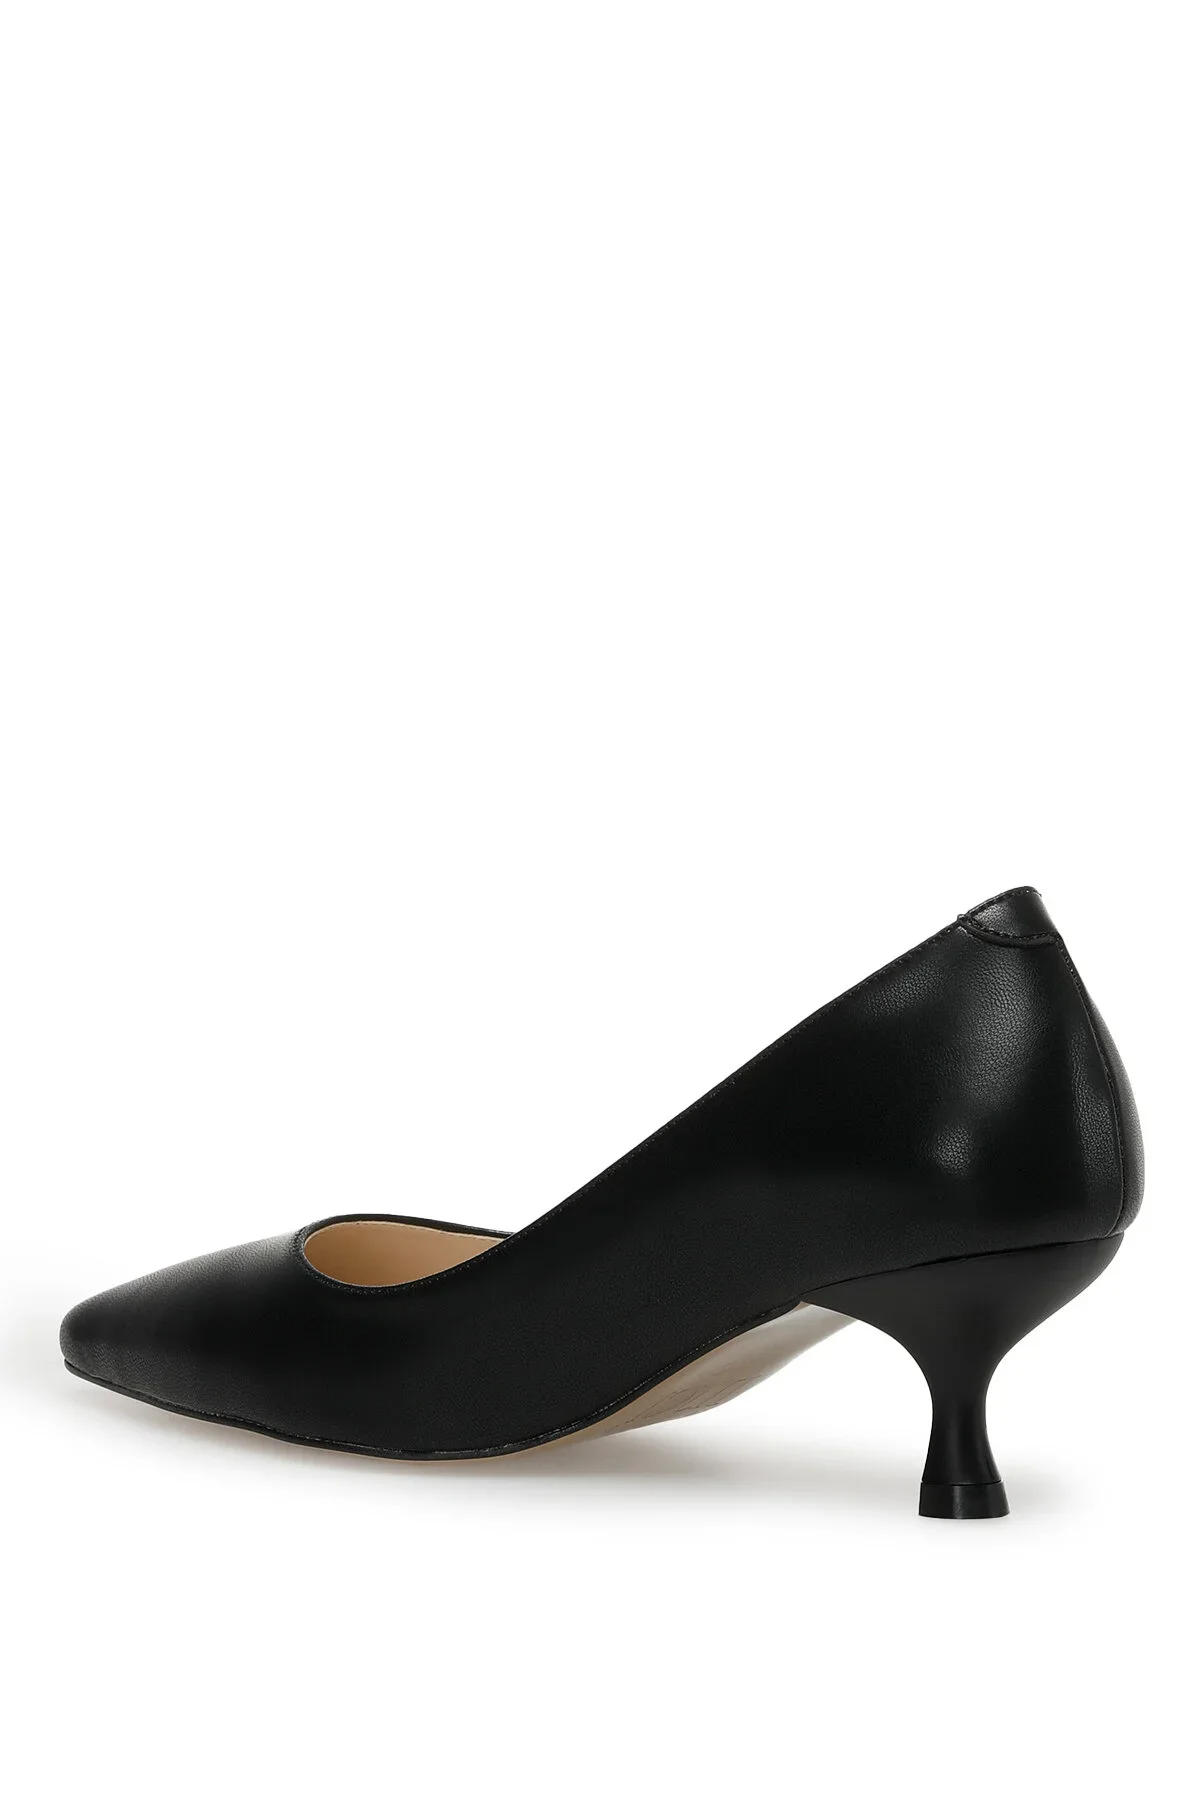 TRUDY 3FX Kadın Topuklu Ayakkabı-Siyah - 3